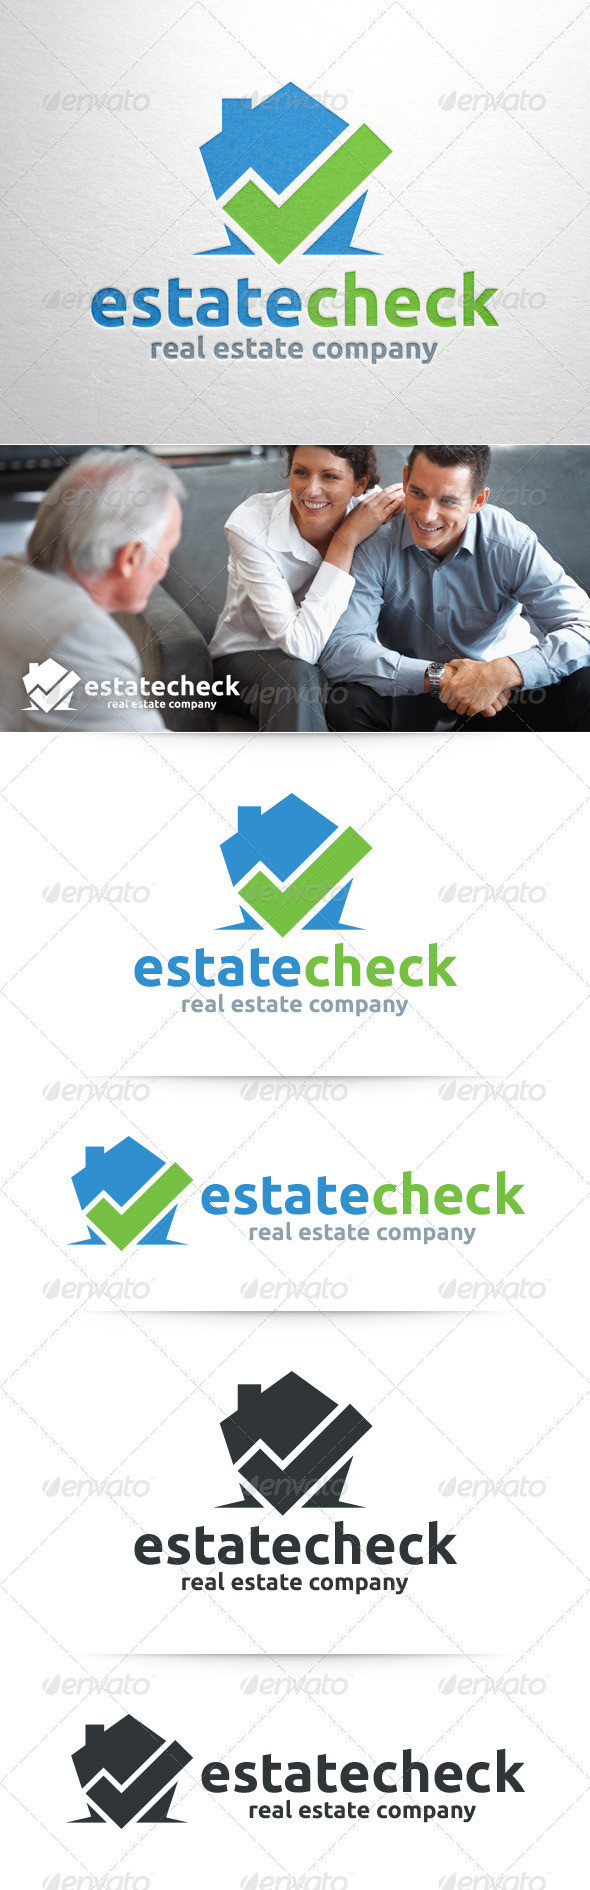 Estate check logo template